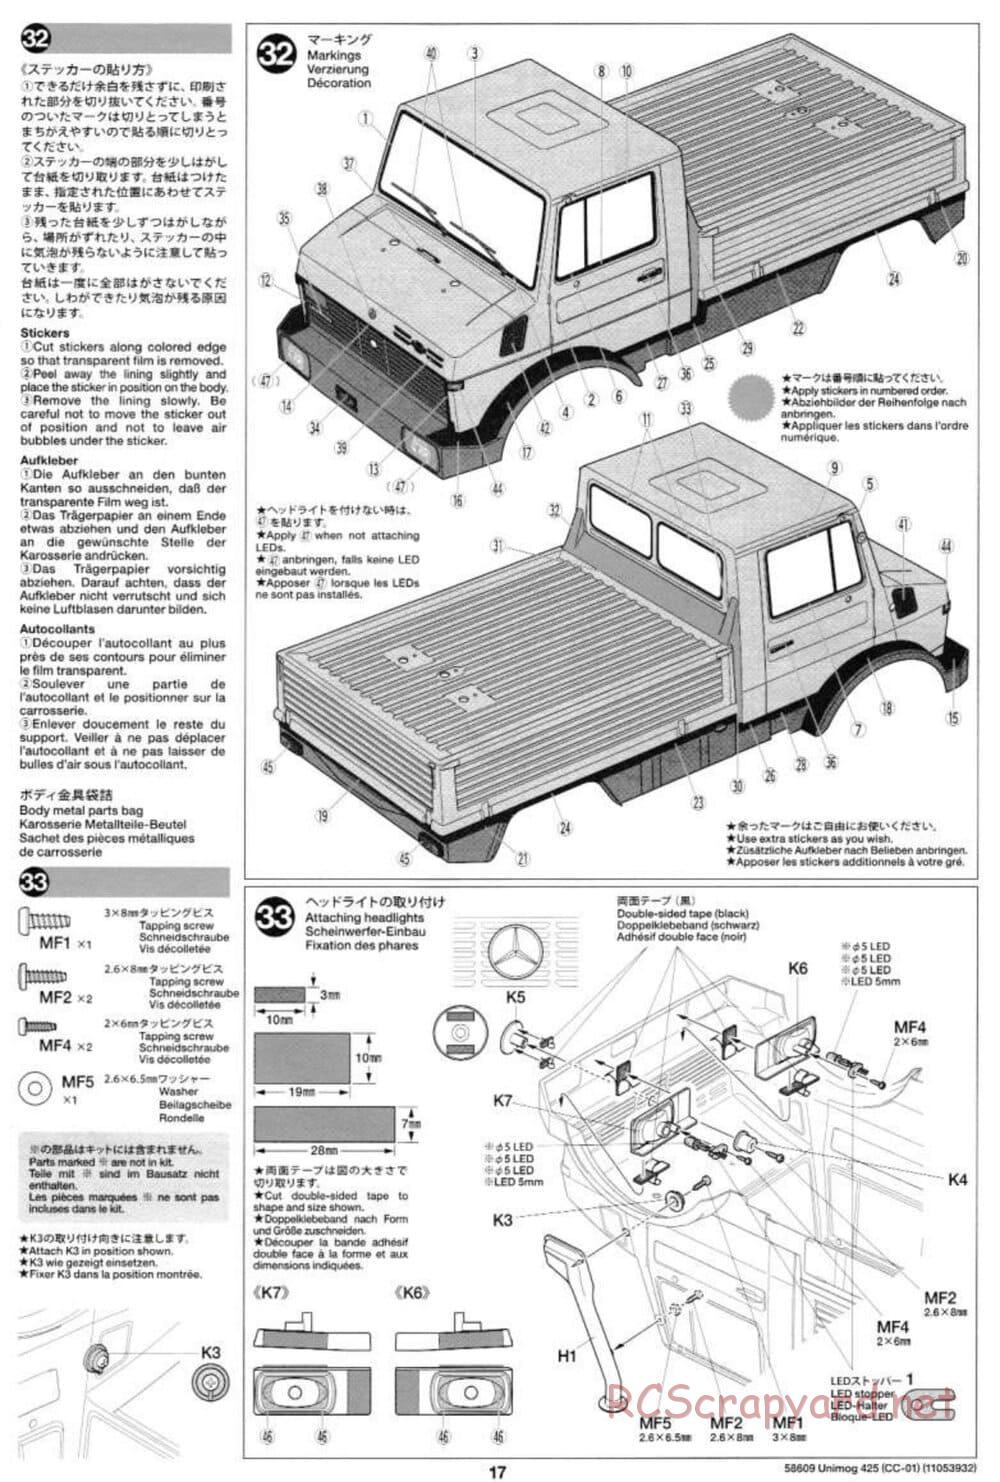 Tamiya - Mercedes-Benz Unimog 425 - CC-01 Chassis - Manual - Page 17